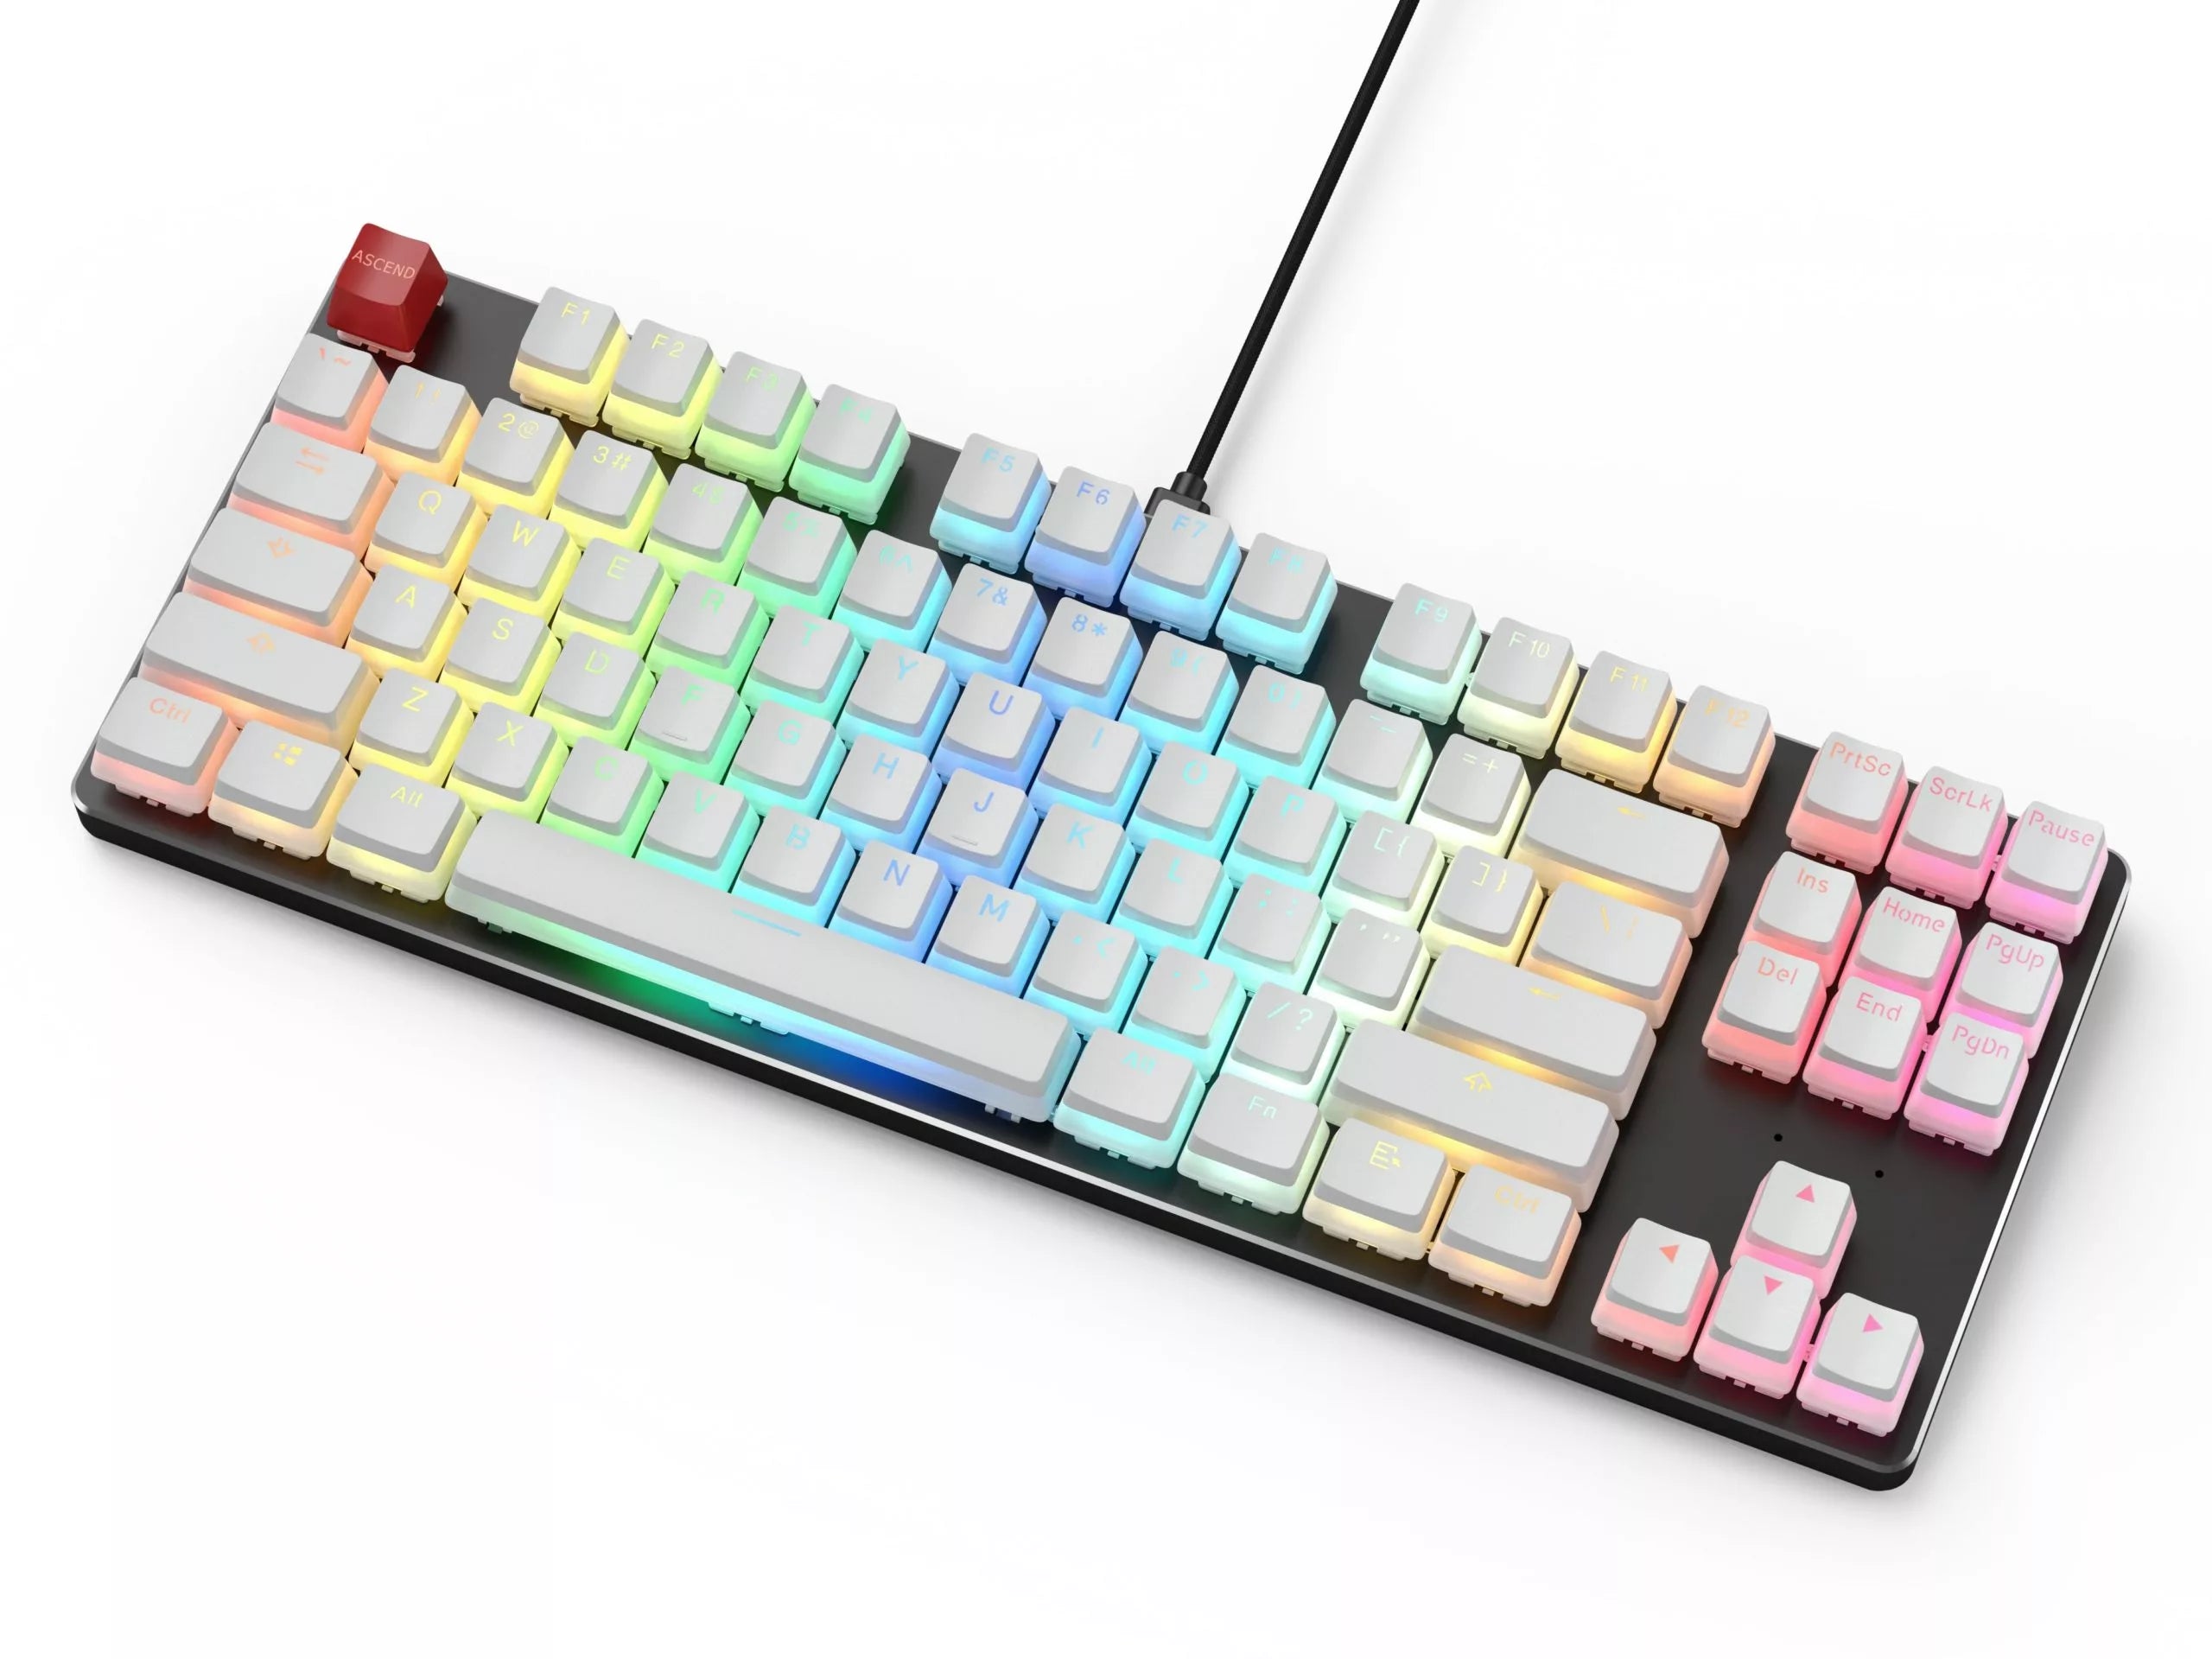 Glorious Keyboard MX Switches